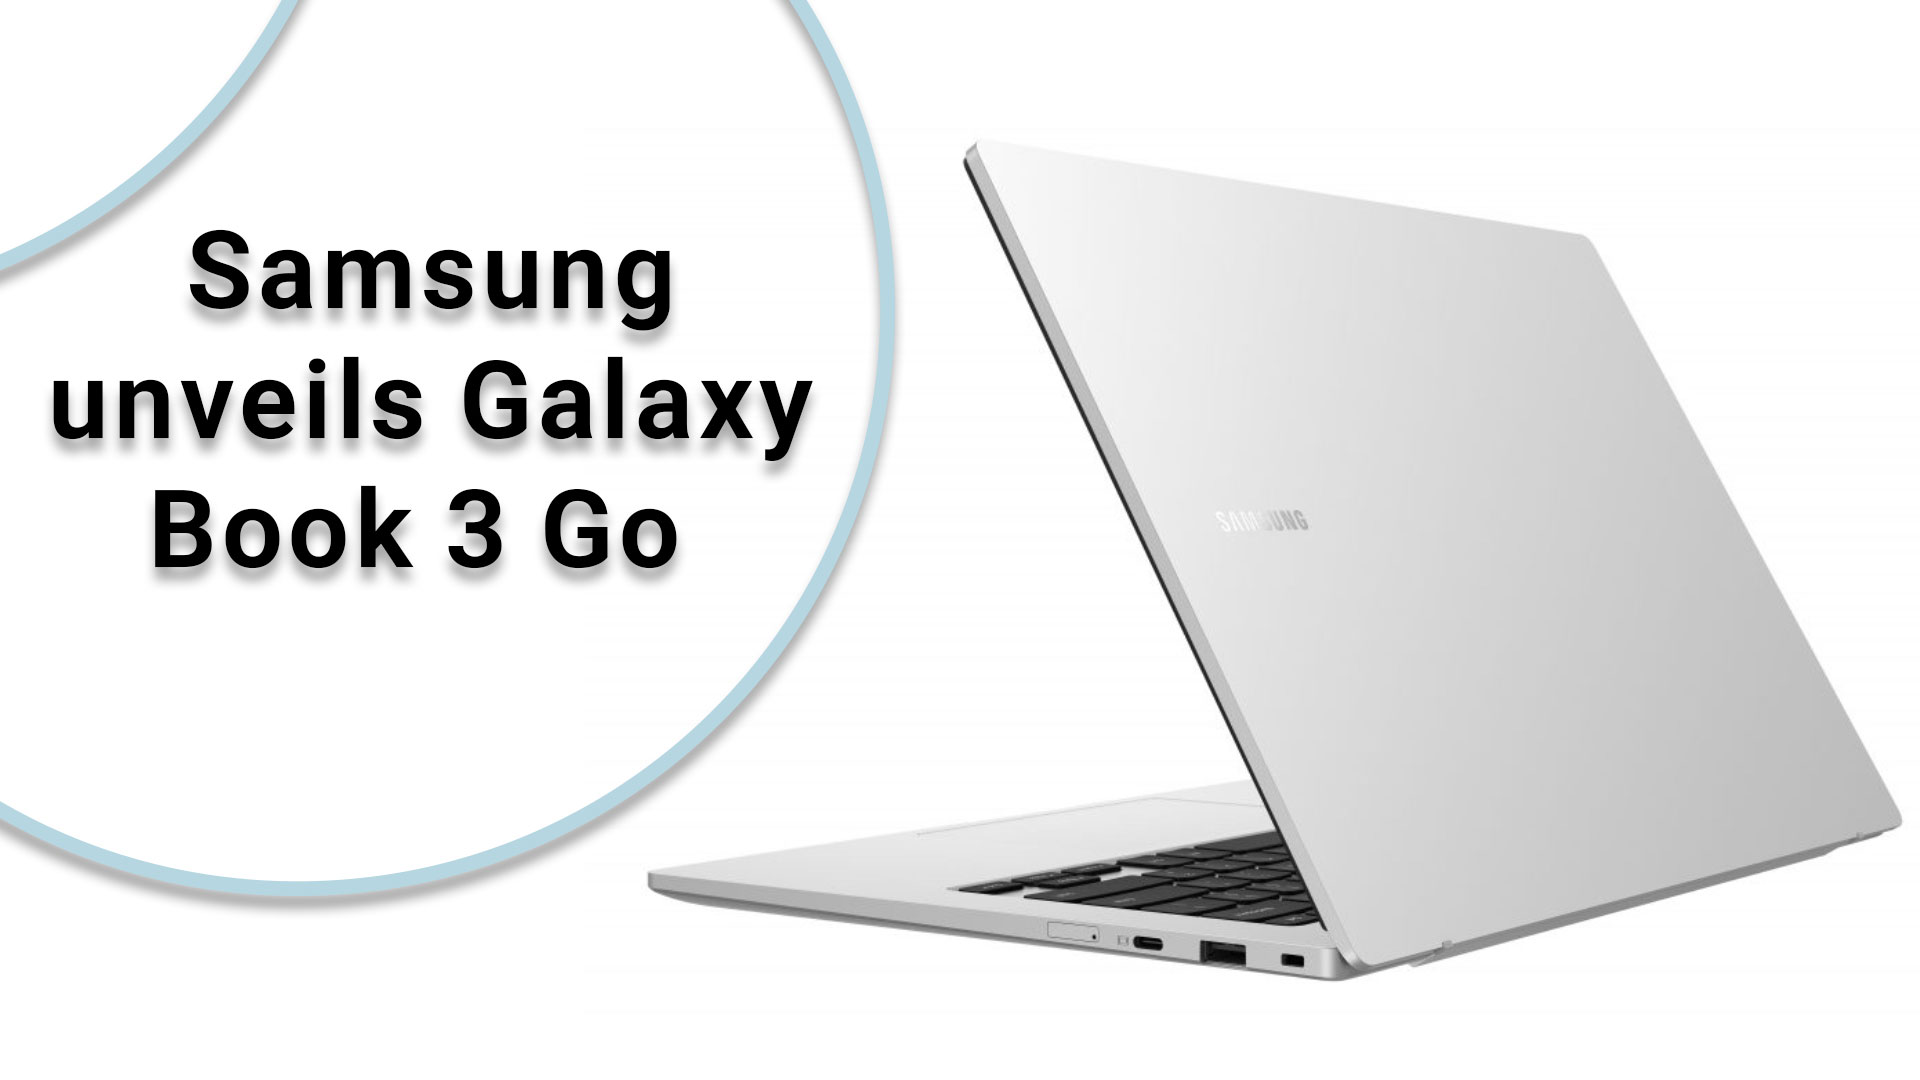 Samsung unveils Galaxy Book 3 Go